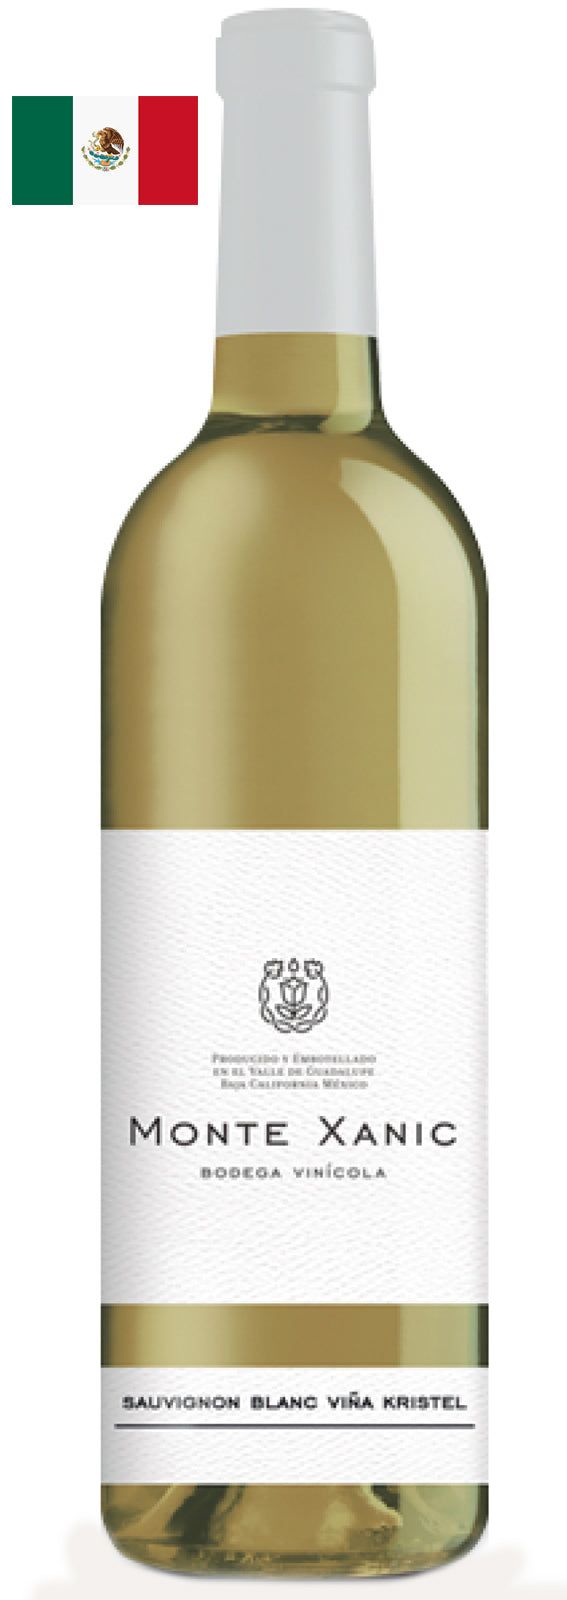 M.X. Sauvignon Blanc Viña Kristel - Club del Gourmet